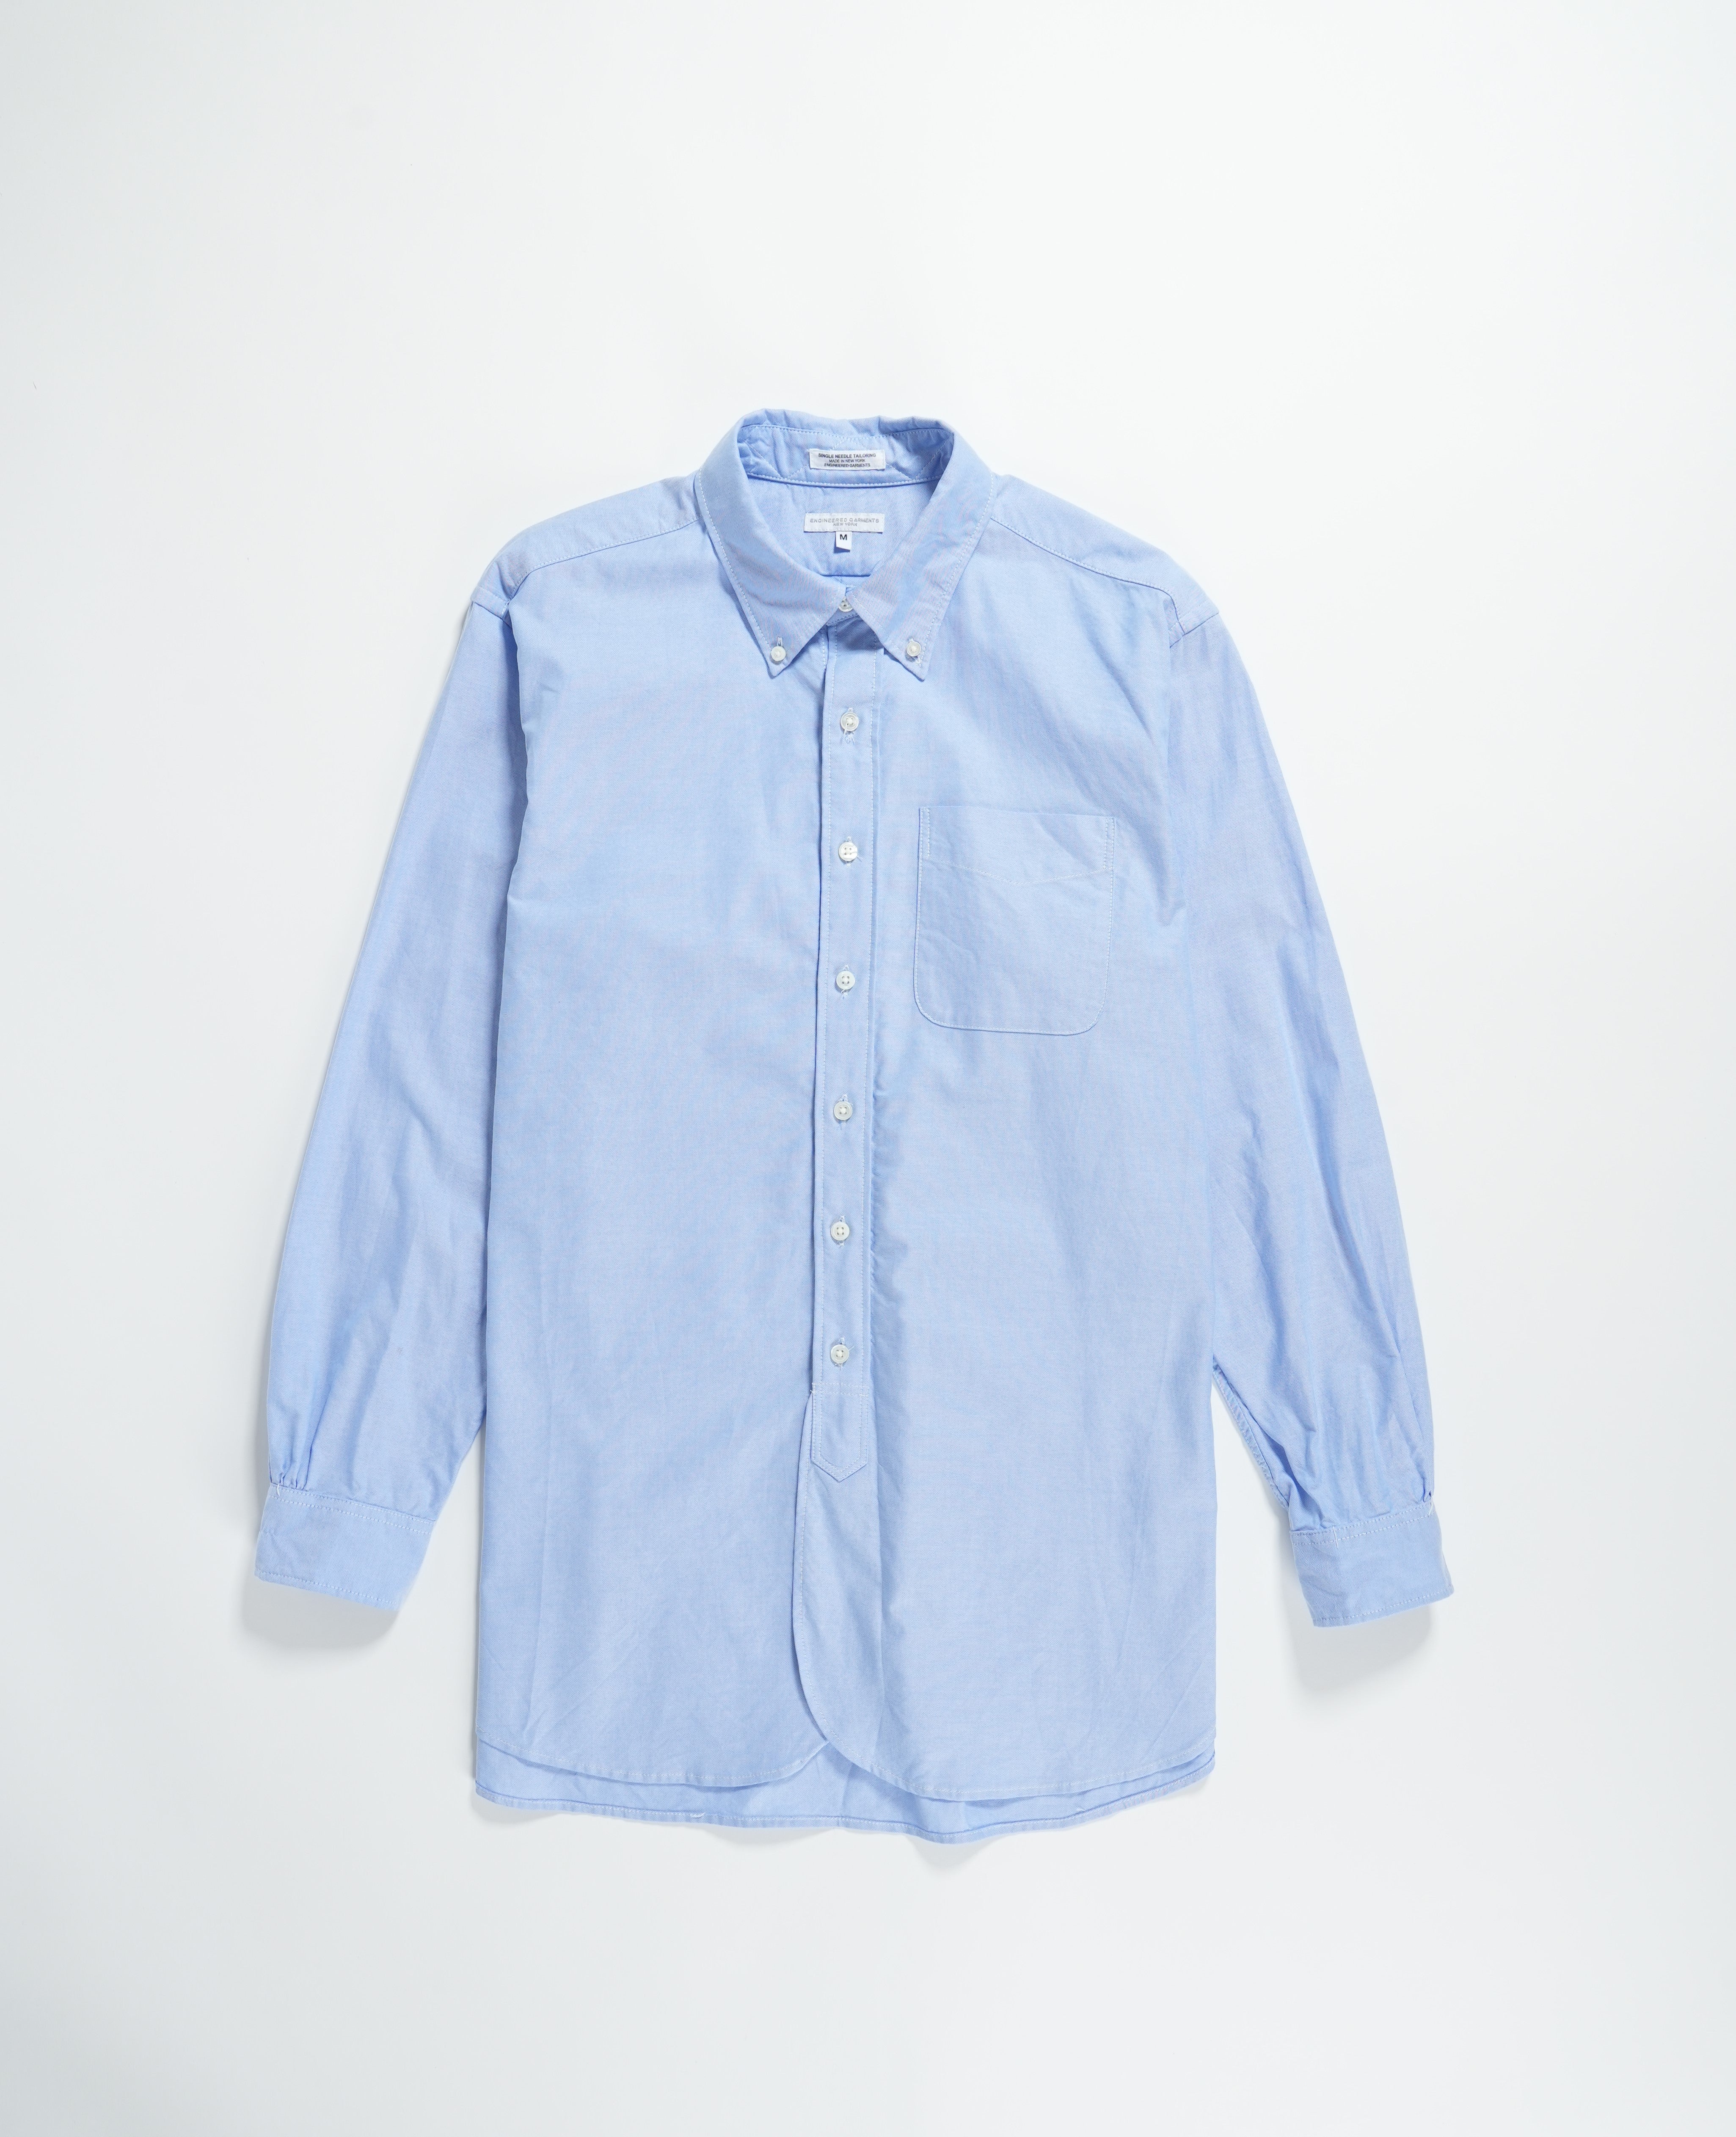 19 Century BD Shirt - Blue Cotton Oxford